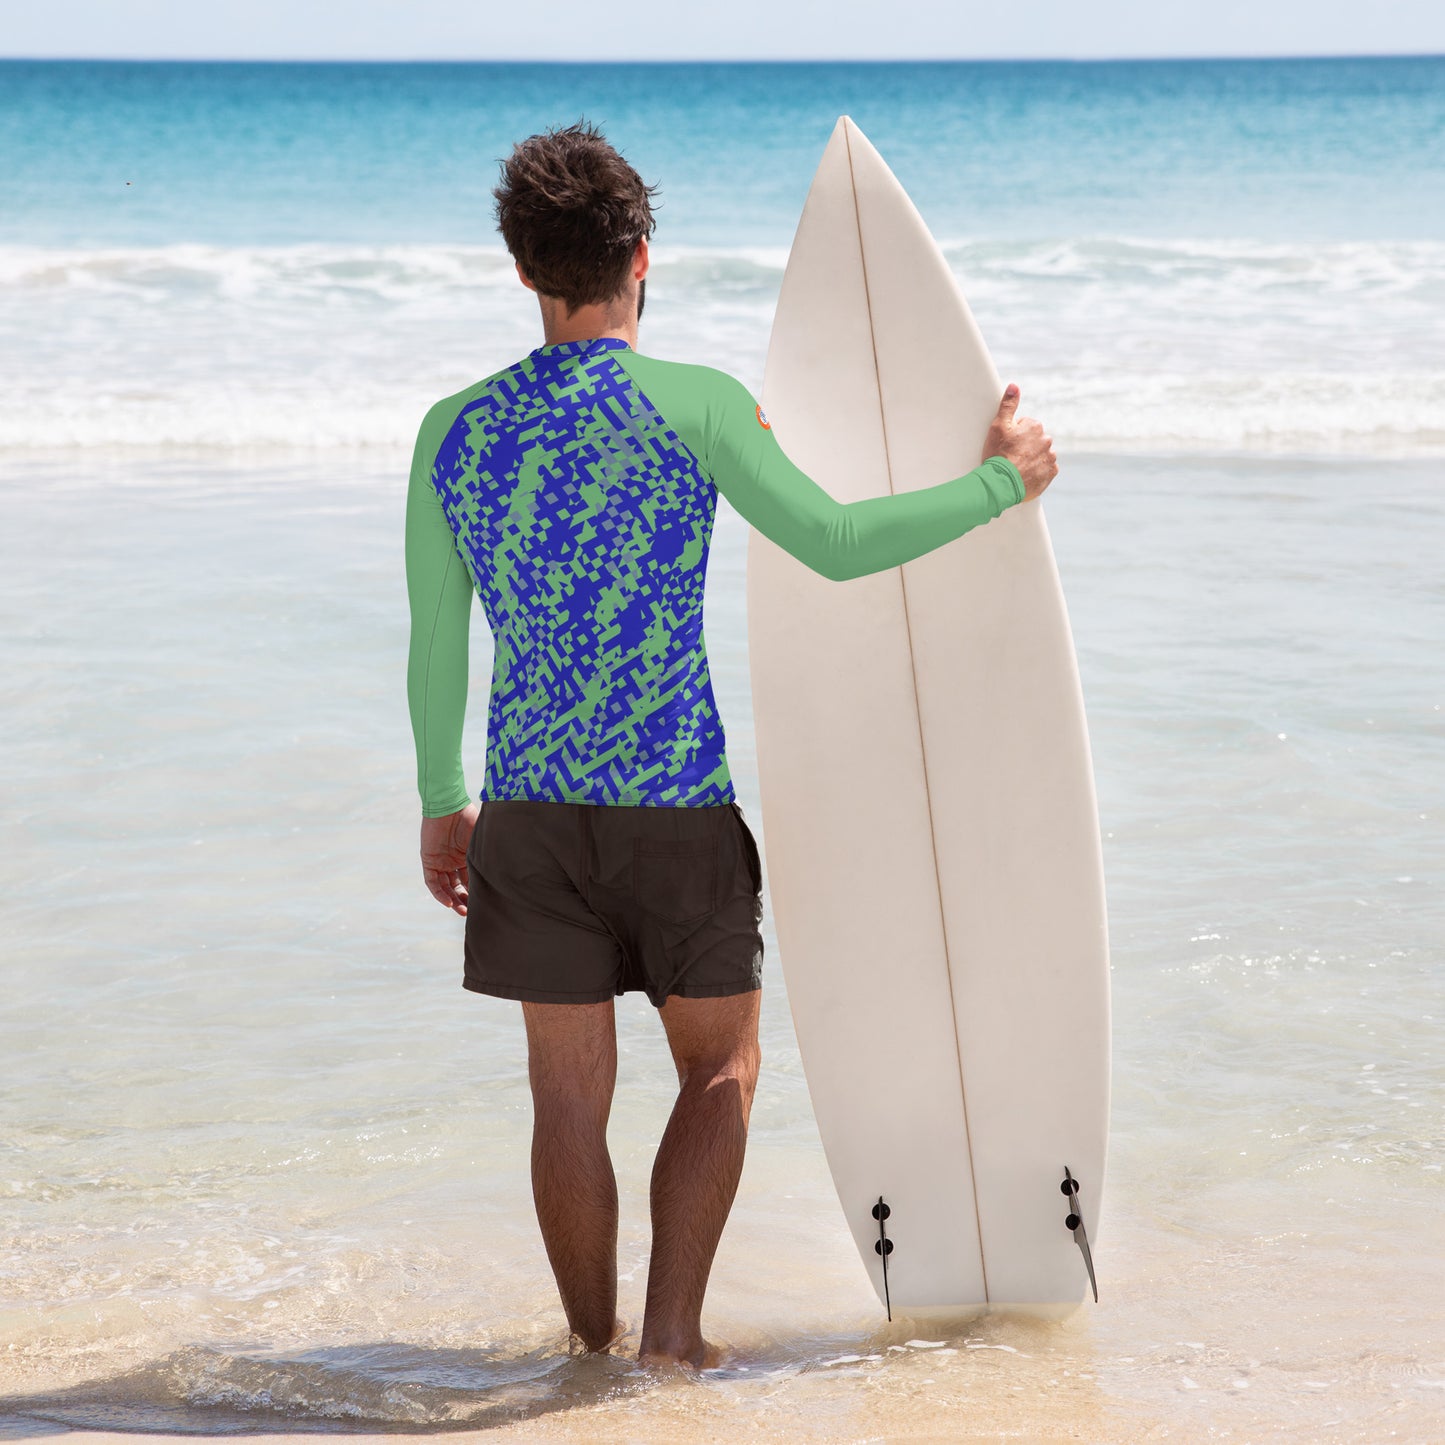 Surf in Style: Men's High-Performance Rash Guard - Aqua Fusion